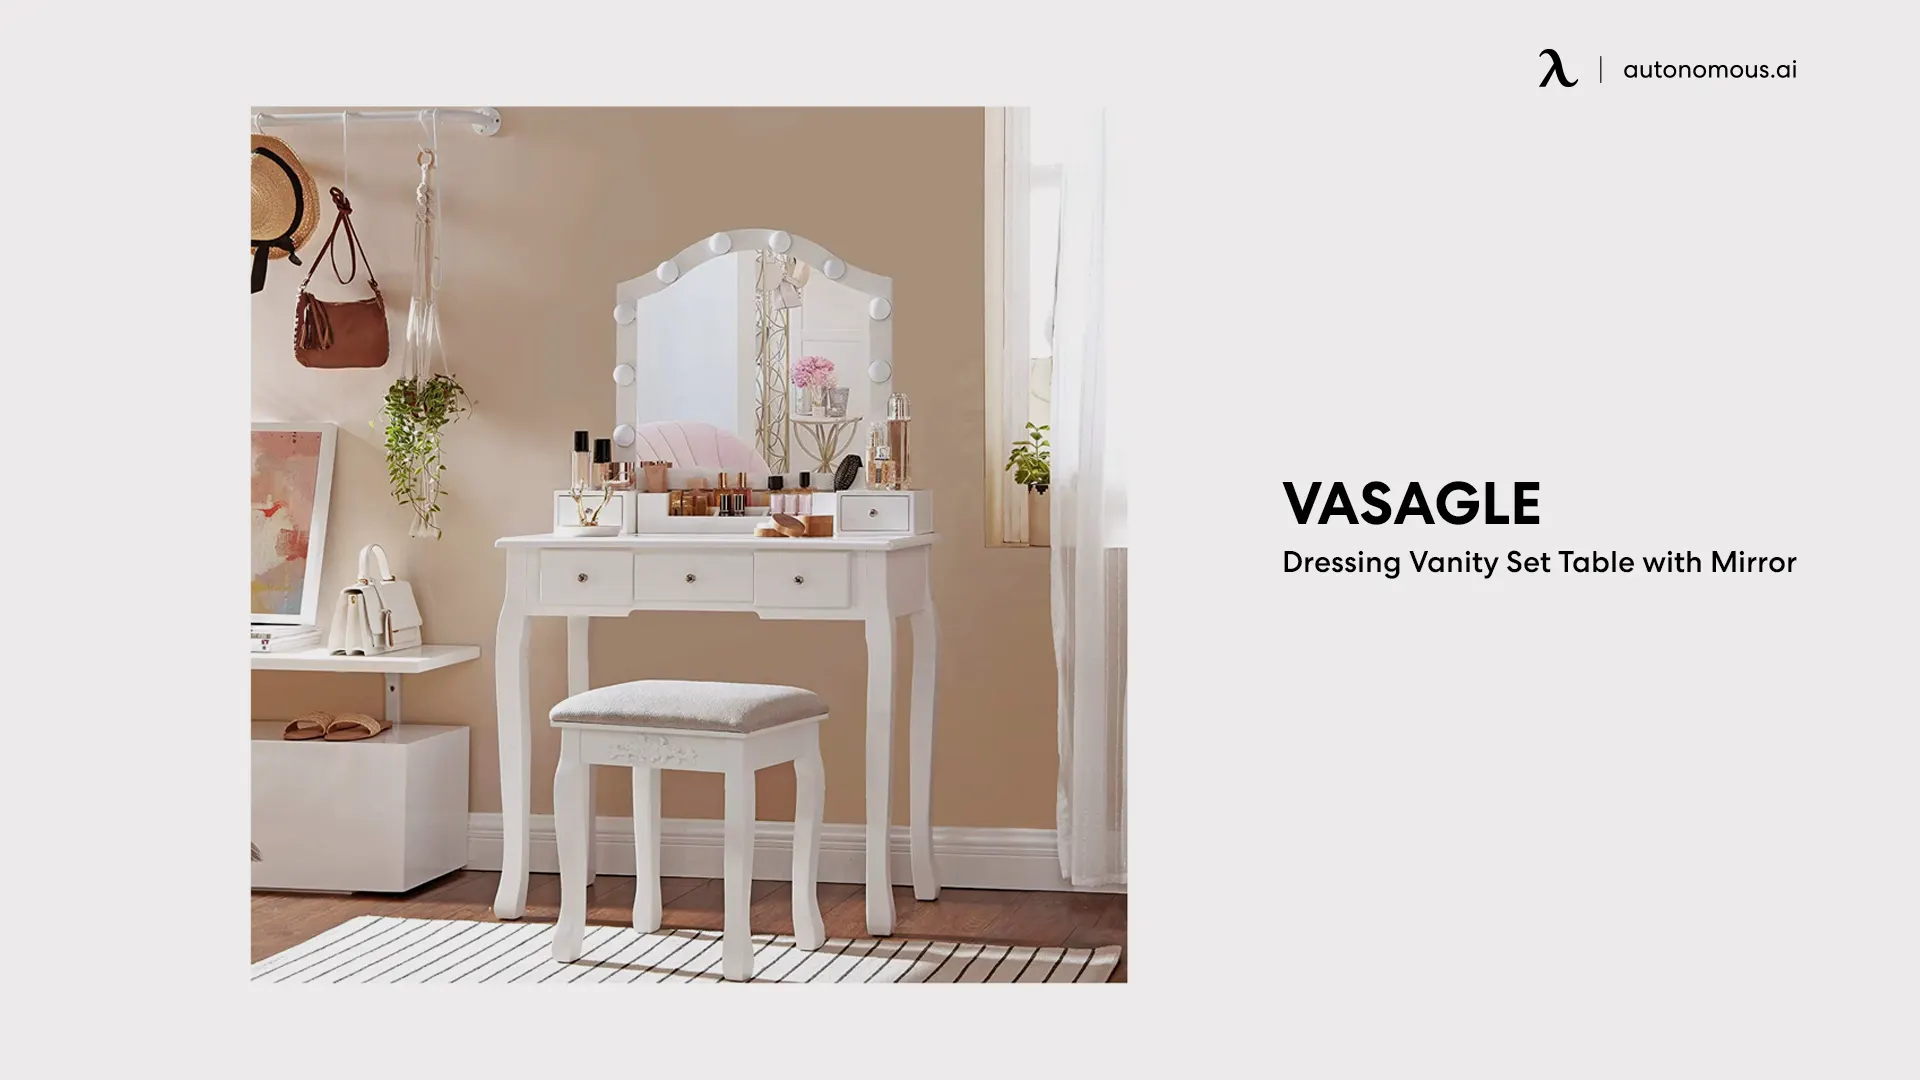 VASAGLE Dressing Vanity Set Table with Mirror